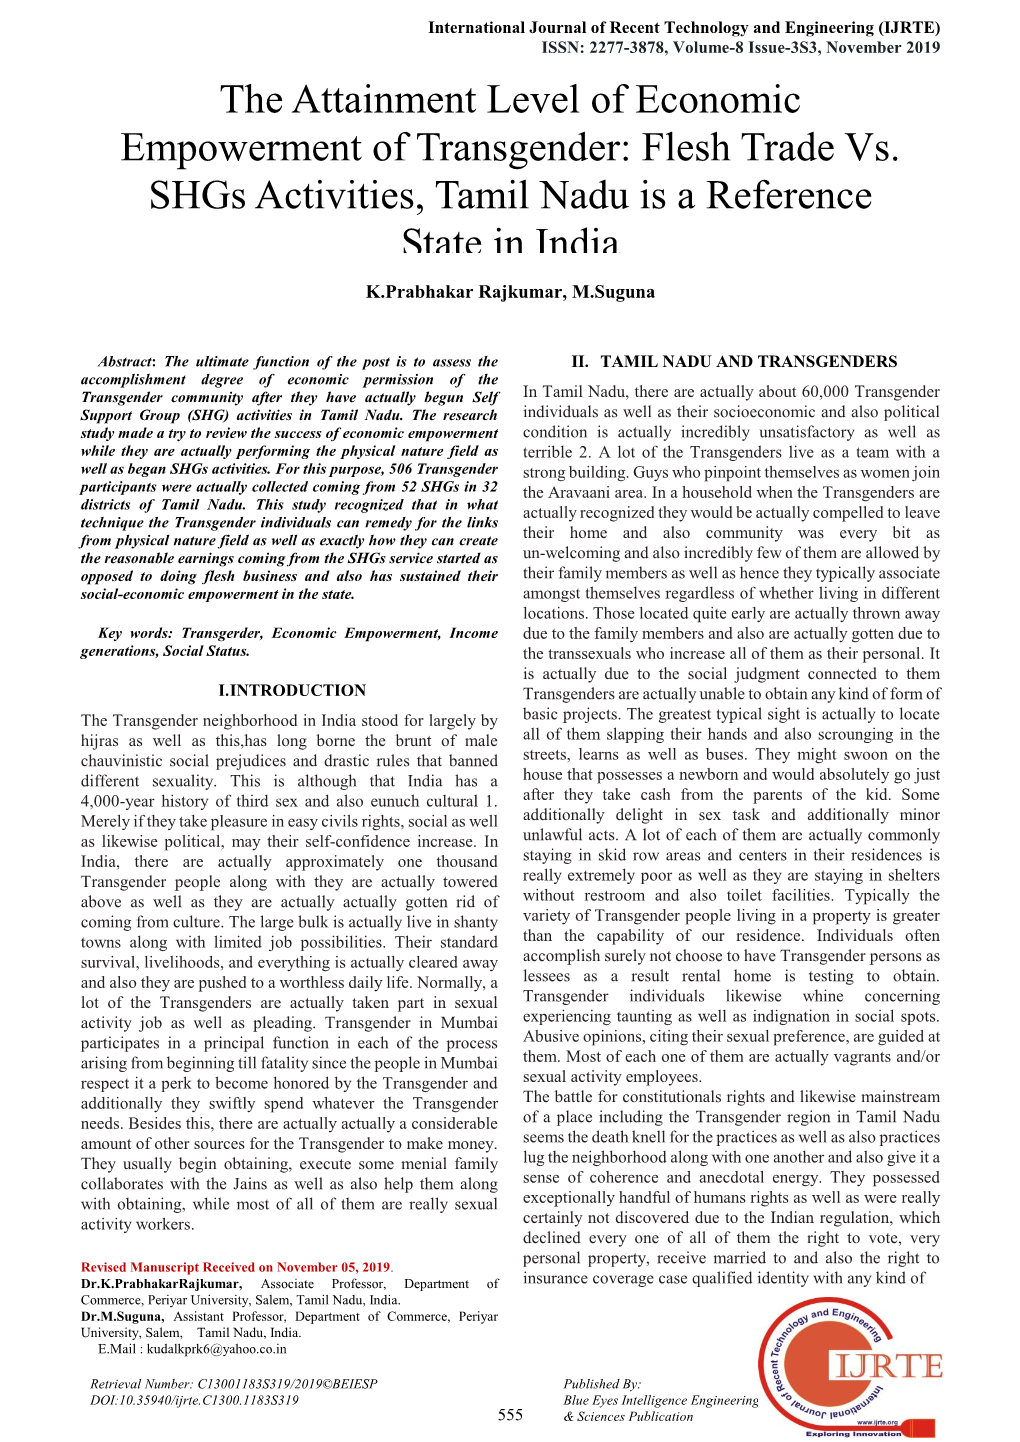 Flesh Trade Vs. Shgs Activities, Tamil Nadu Is a Reference State in India K.Prabhakar Rajkumar, M.Suguna